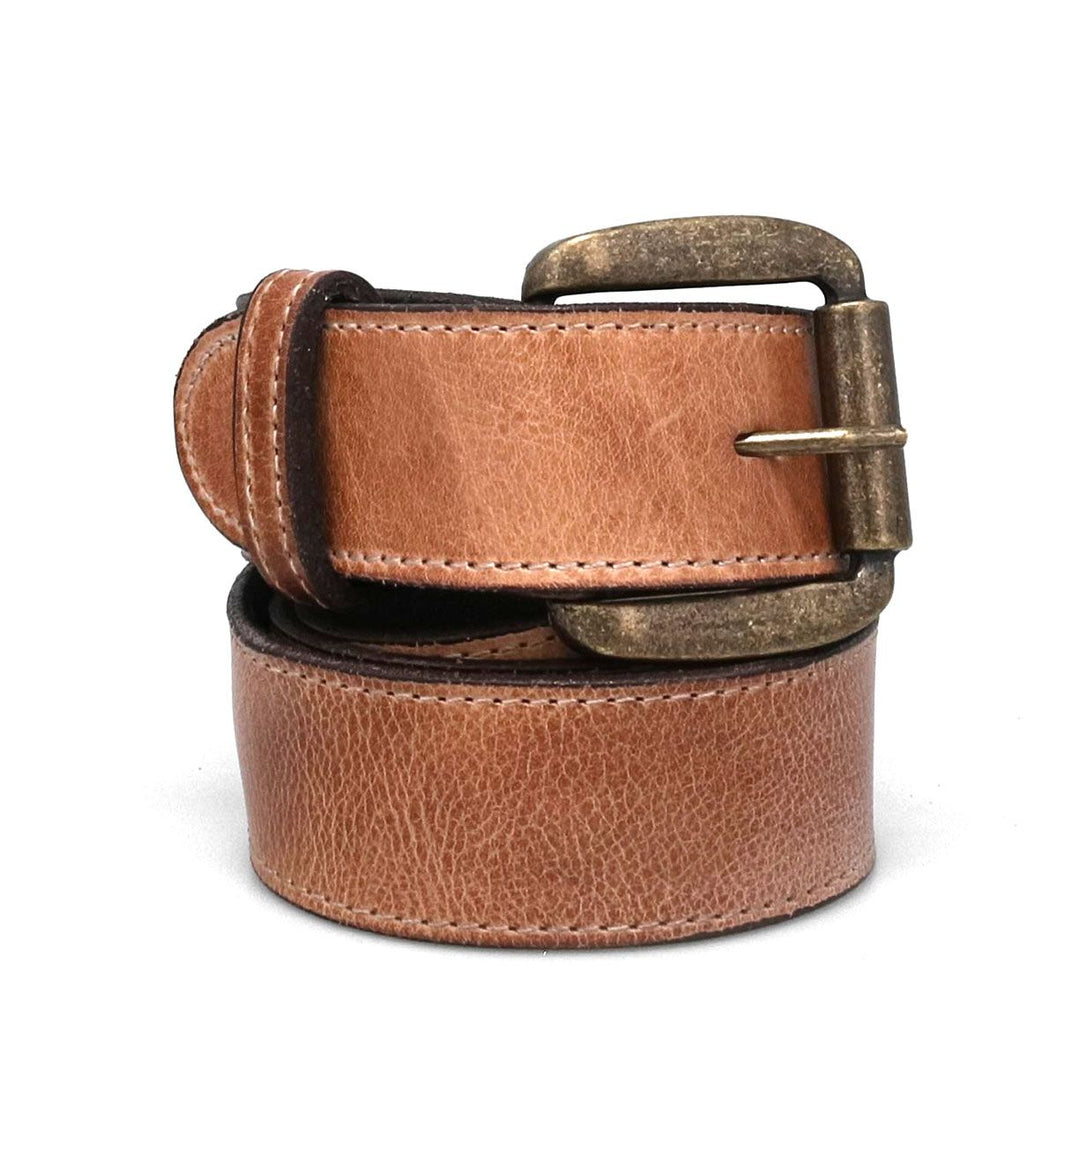 Meander Leather Belt, Tan Rustic